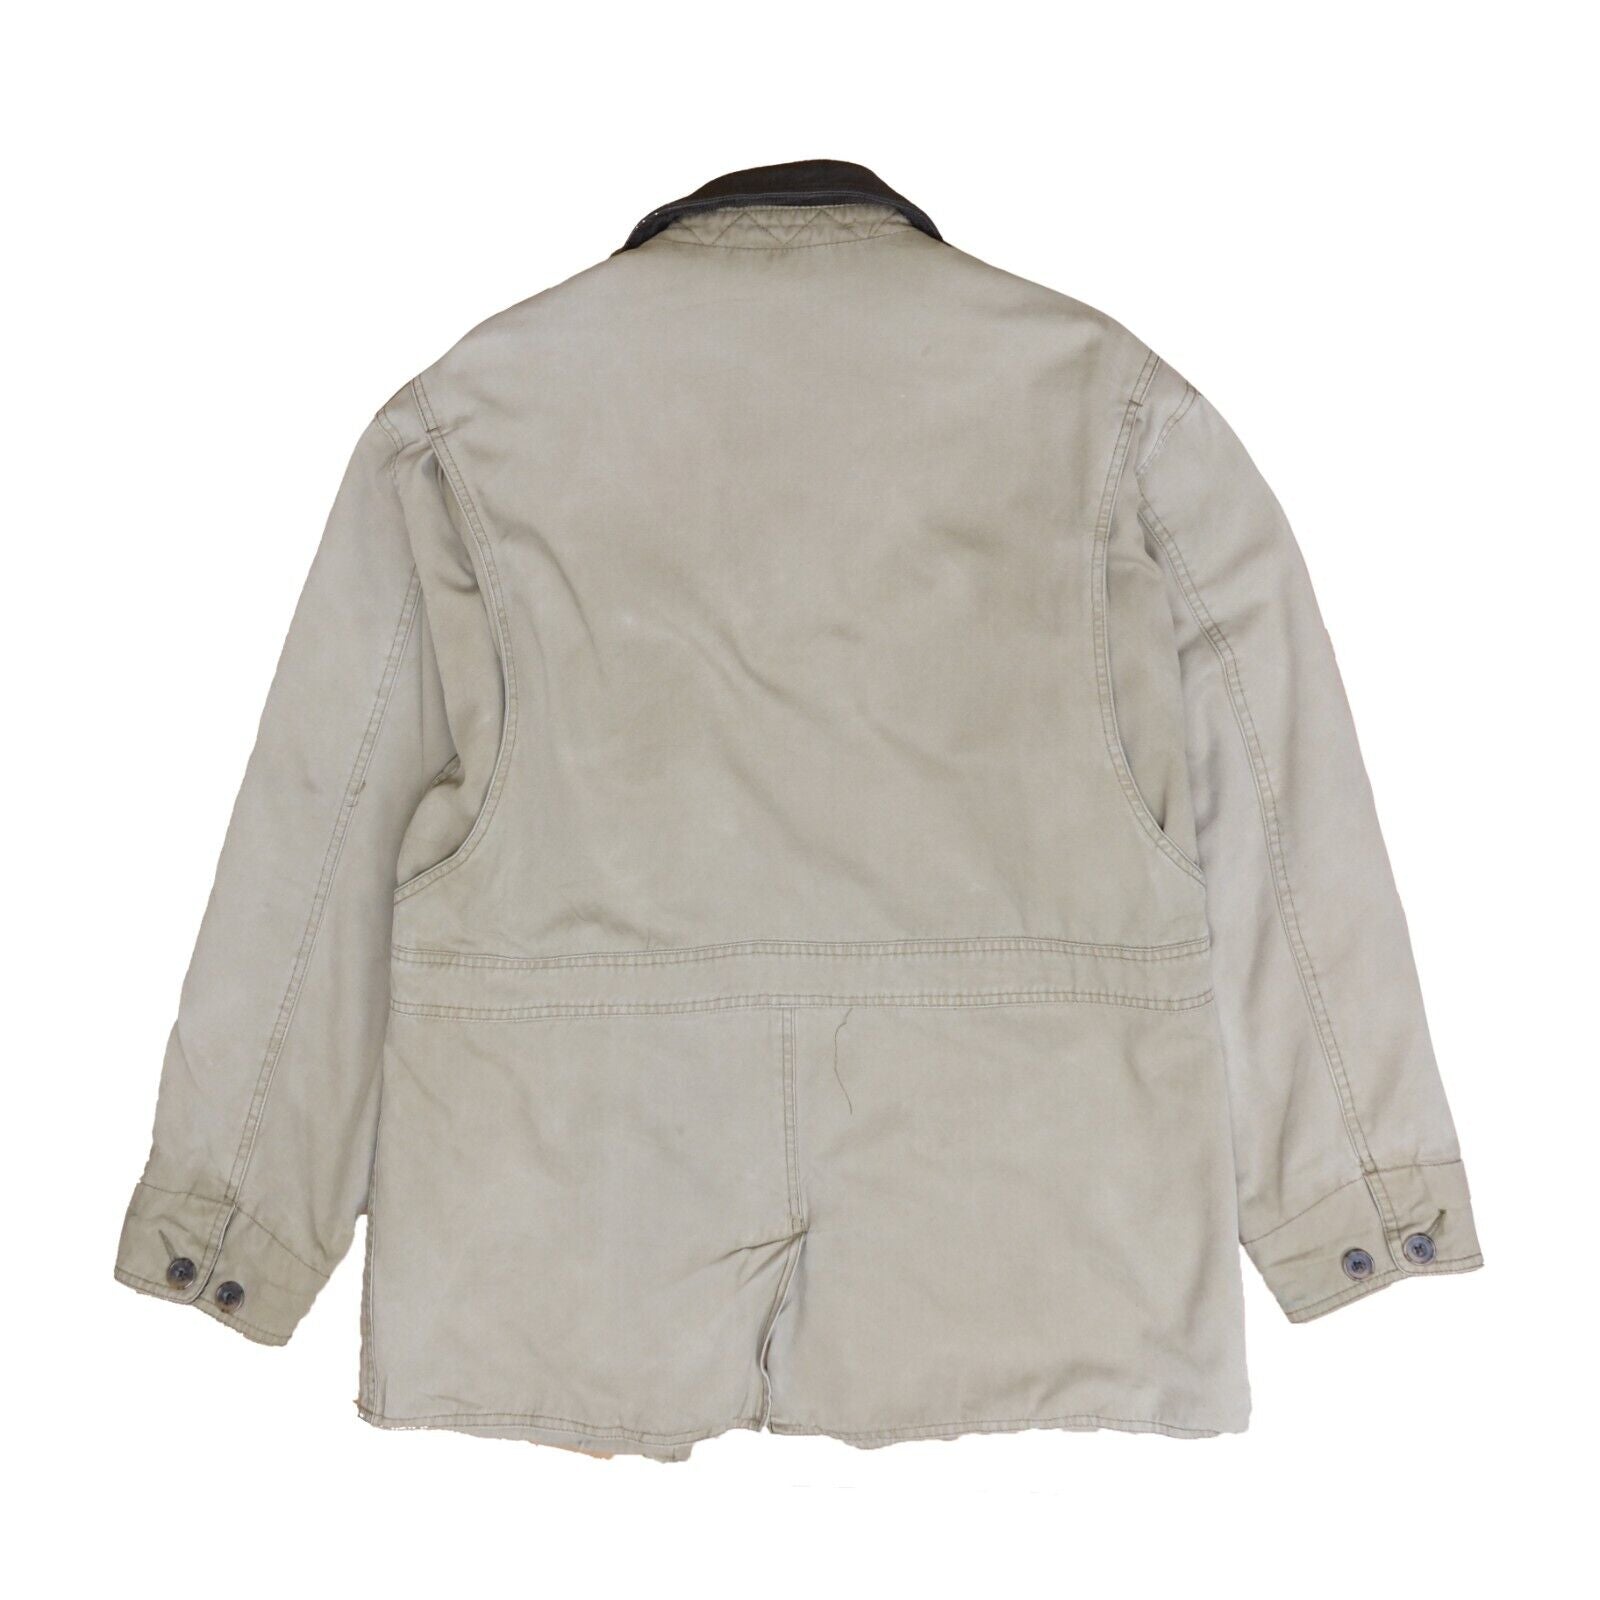 Vintage Gap Barn Work Coat Jacket Size Medium Beige Plaid Lined